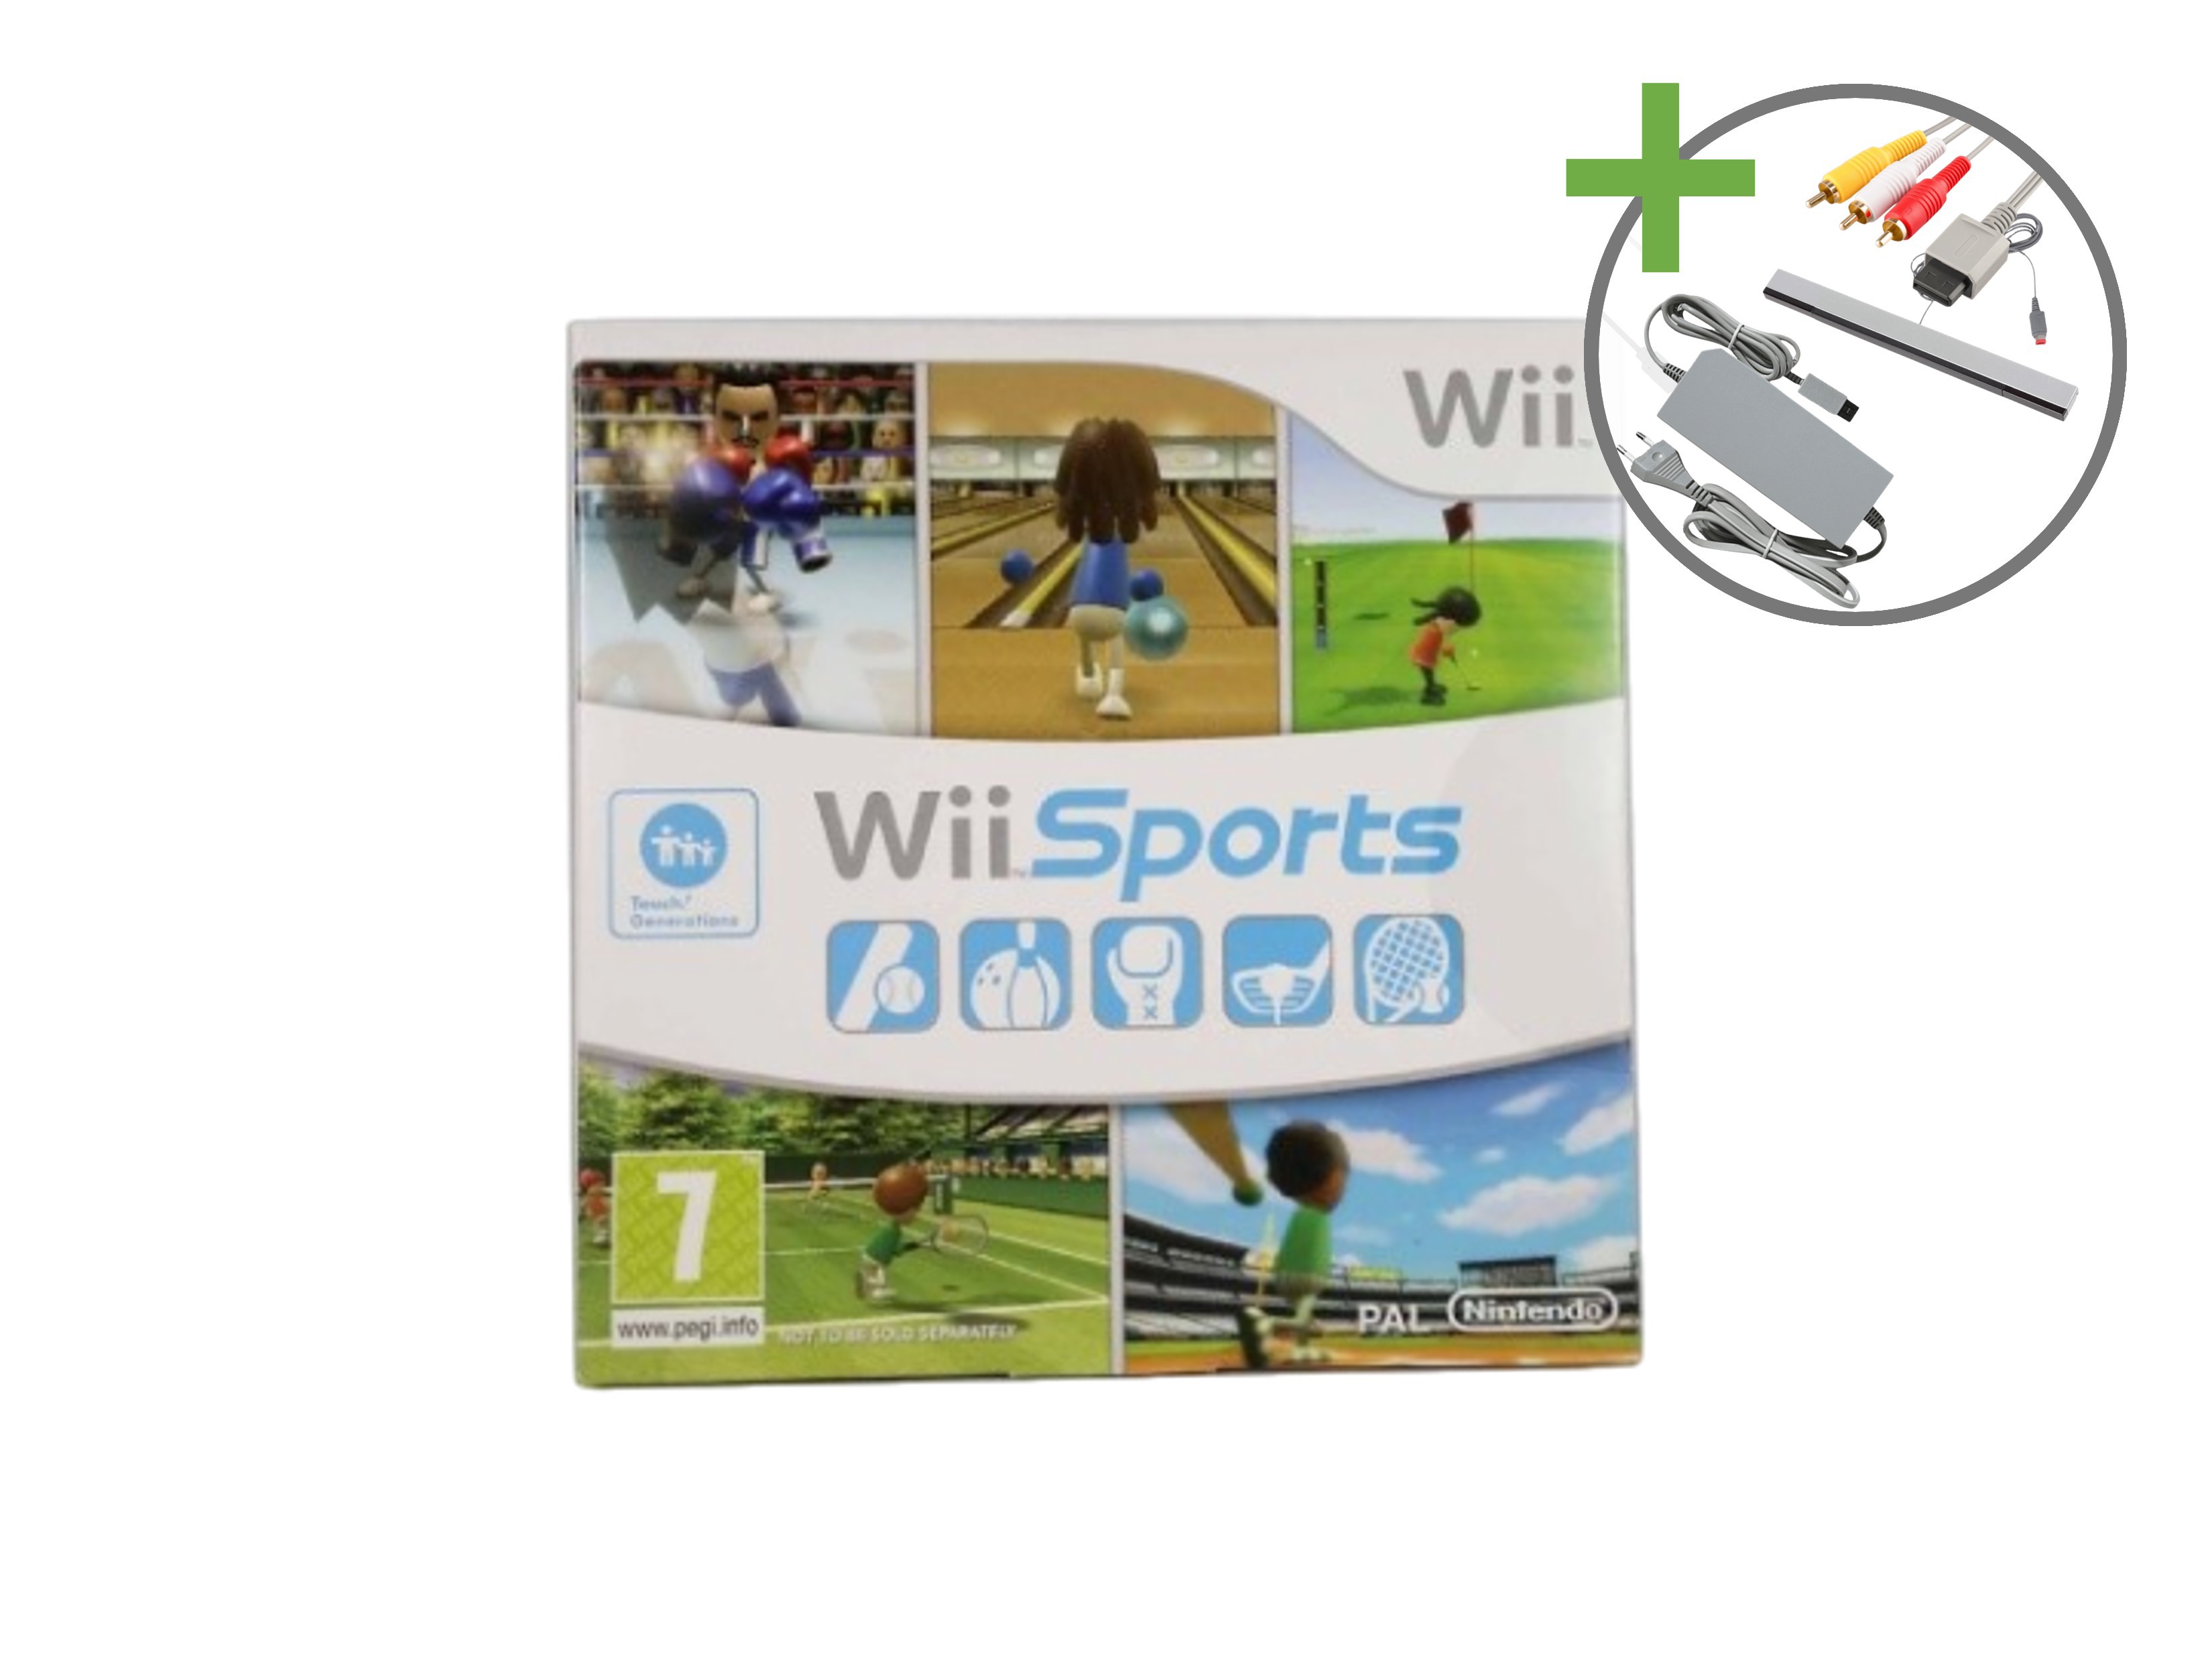 Nintendo Wii Starter Pack - Wii Sports Edition [Complete] - Wii Hardware - 5